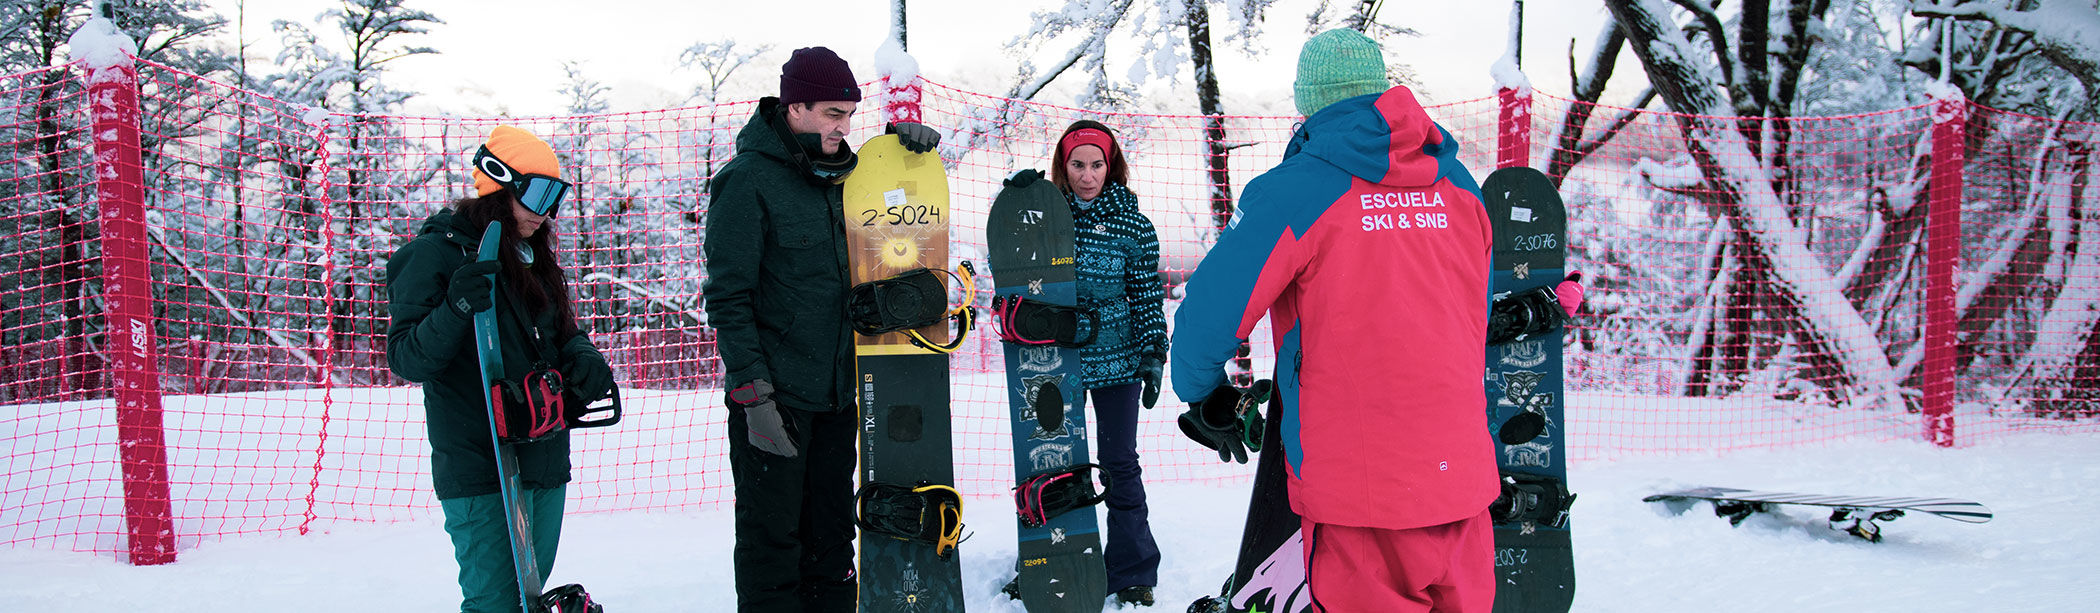 Clases Grupales de Snowboard